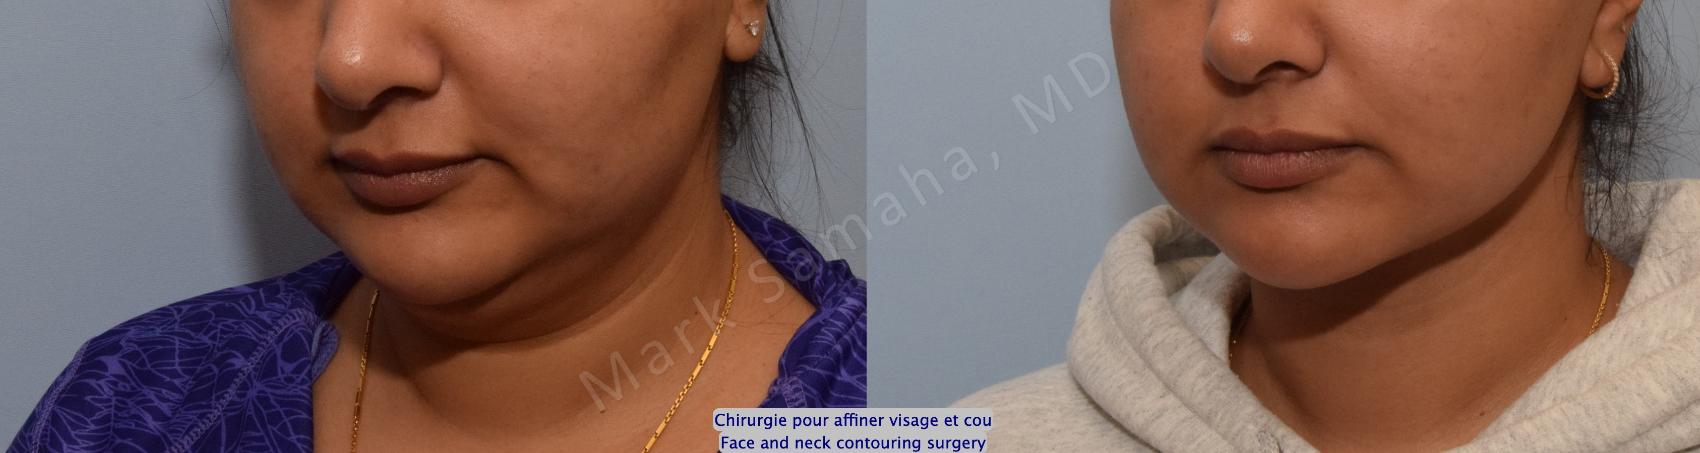 Before & After Chirurgie d’affinement du visage / Face Slimming Surgery Case 204 Left Oblique View in Montreal, QC